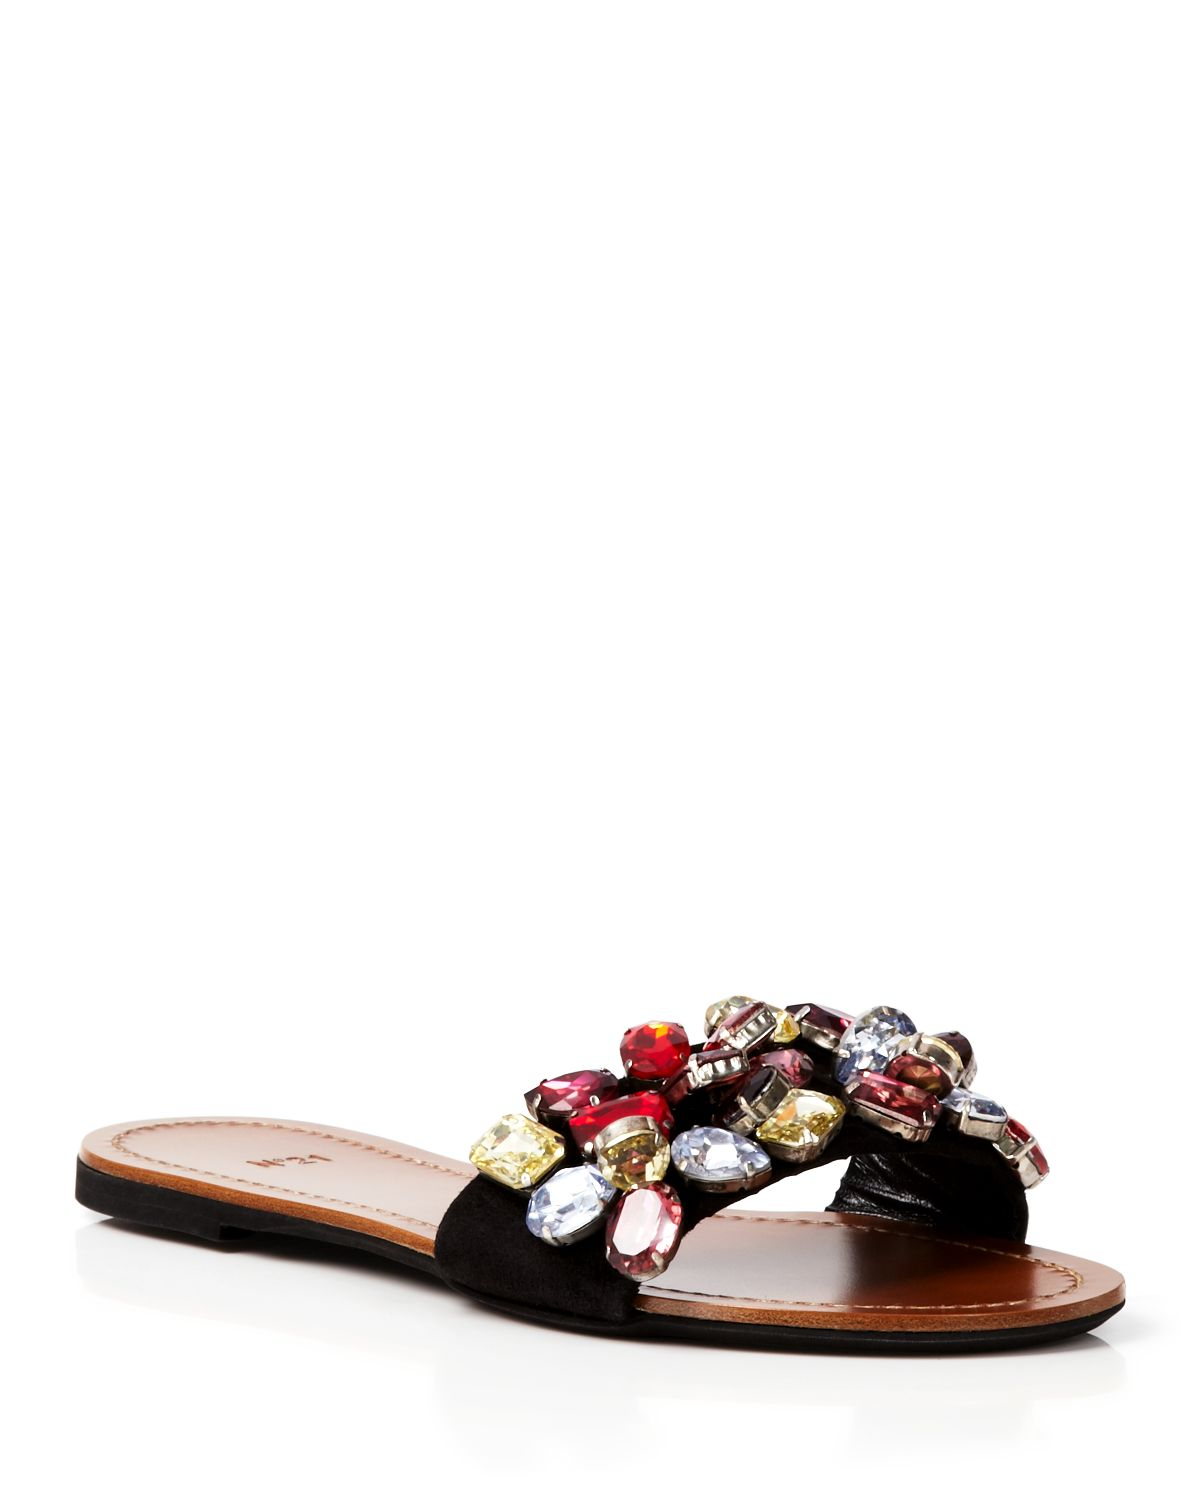 Lyst - N°21 Flat Slide Sandals - Jeweled